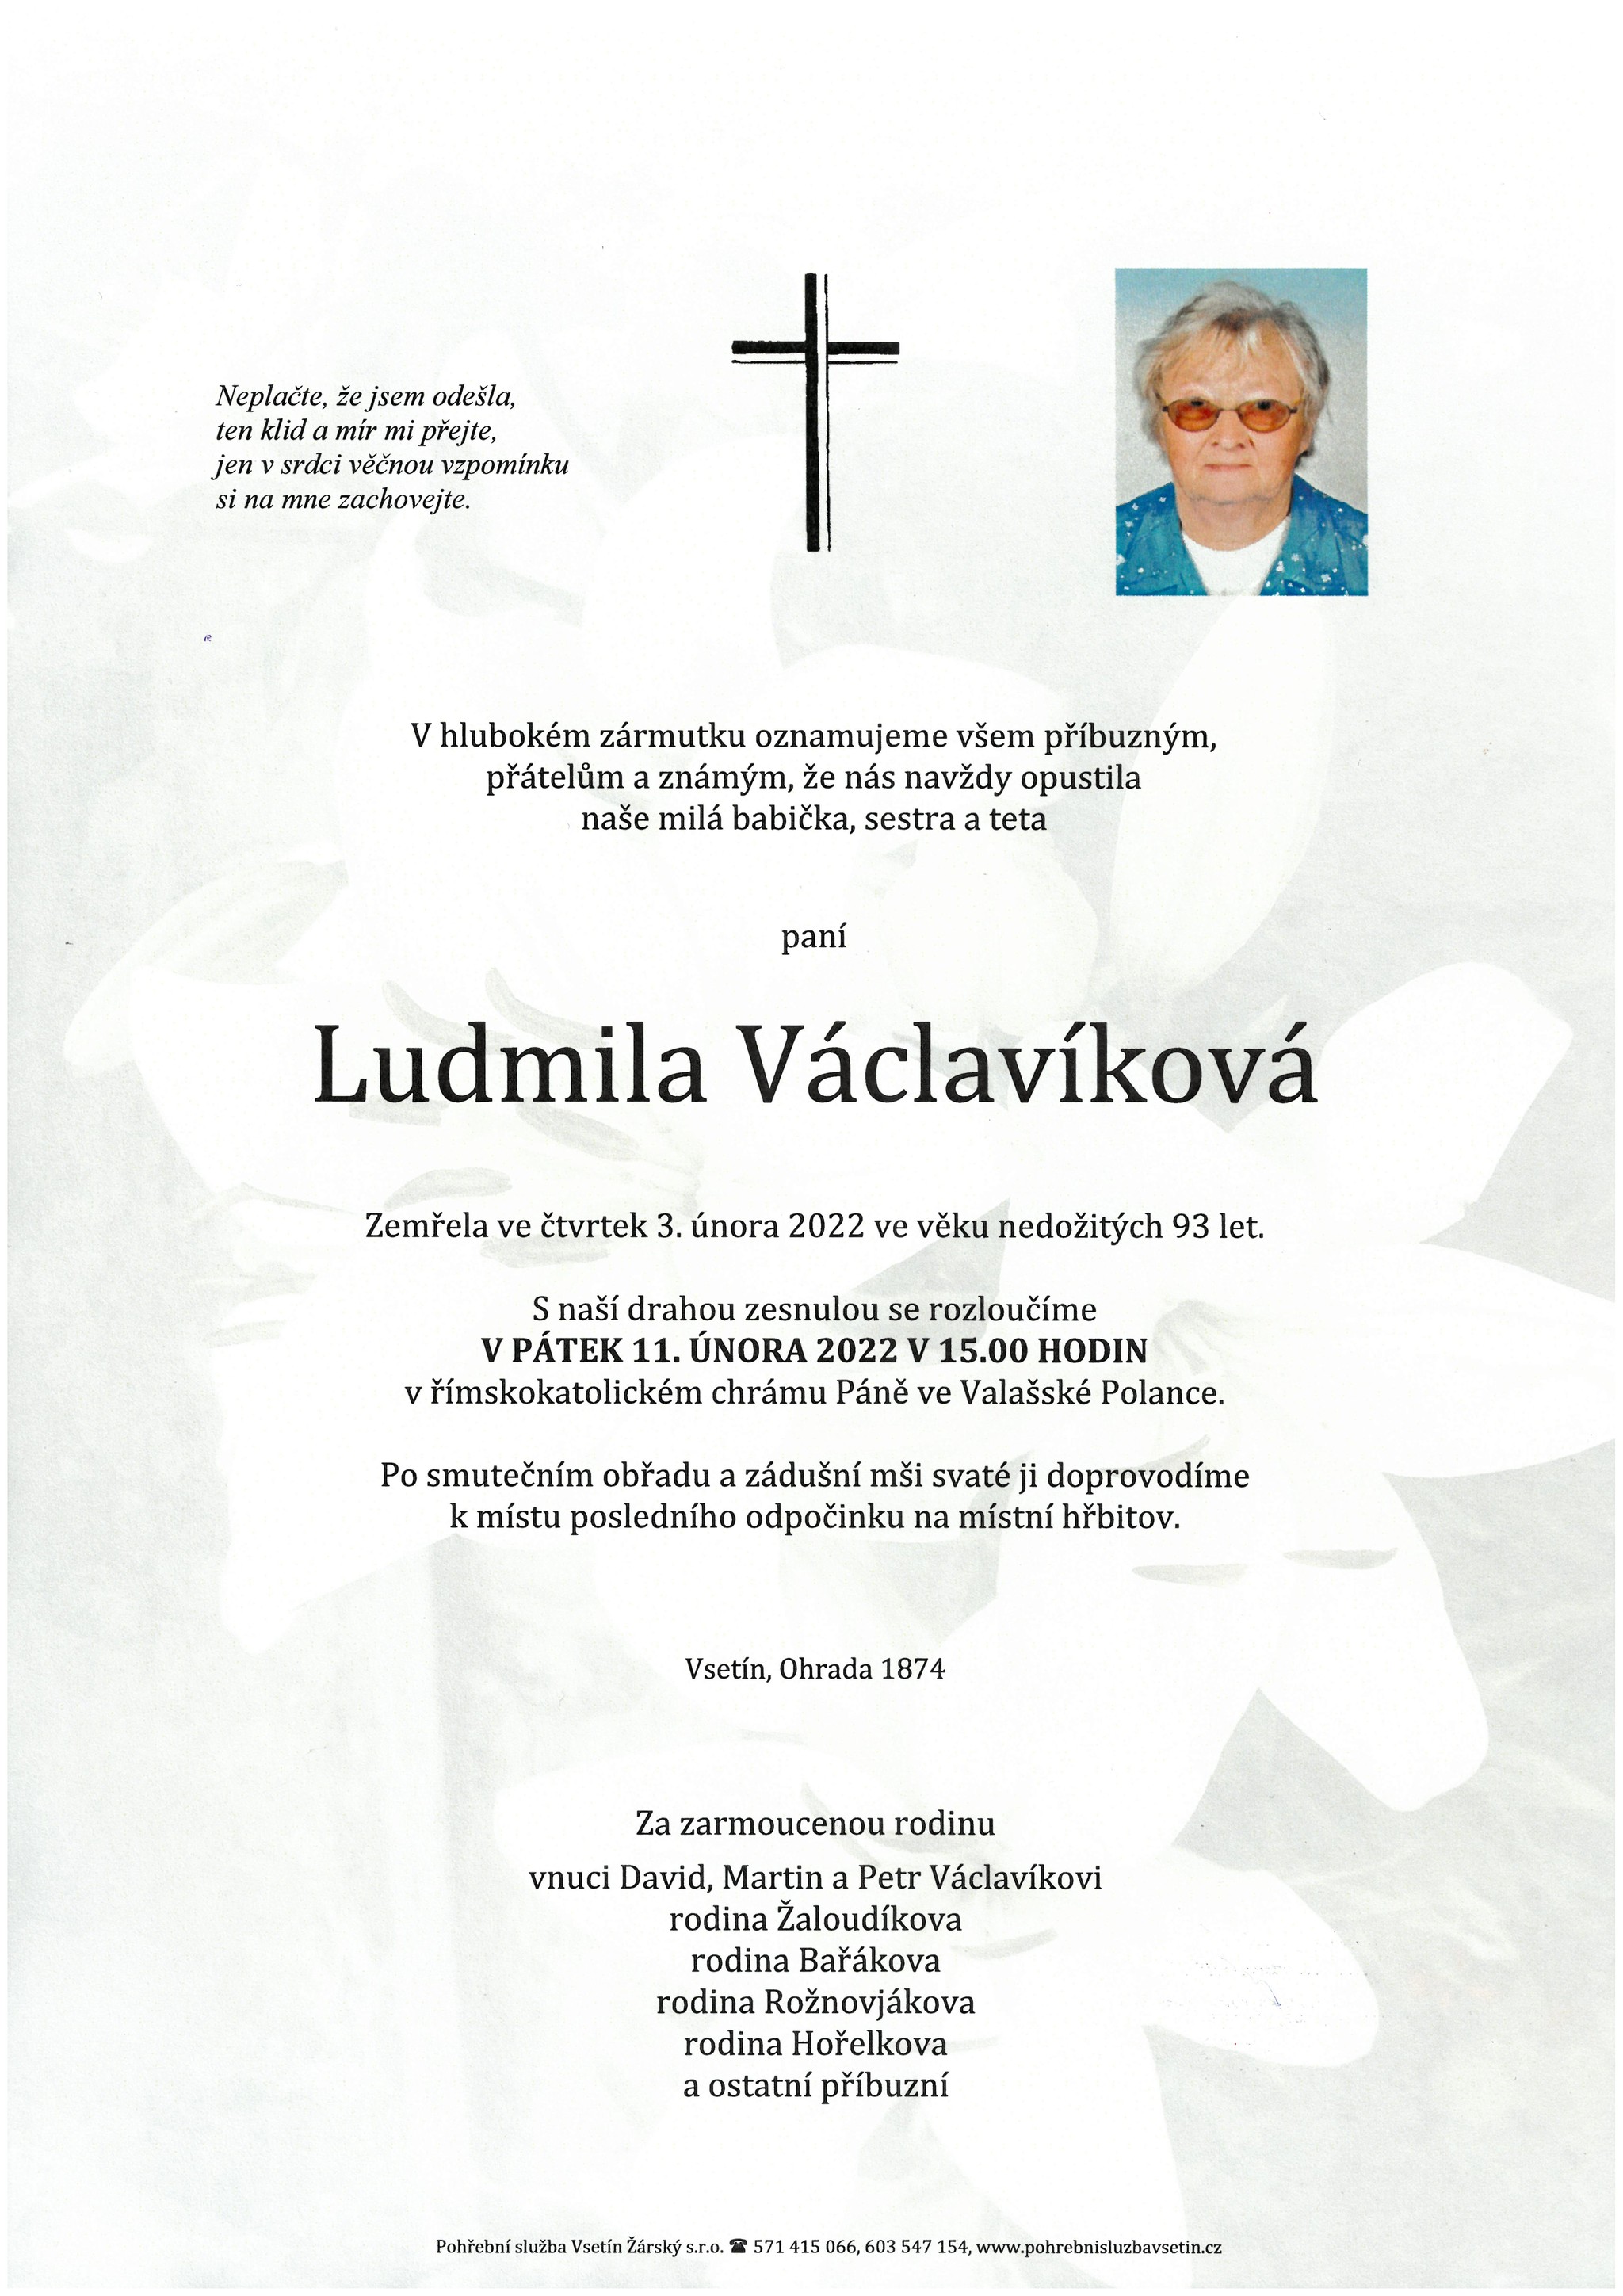 Ludmila Václavíková